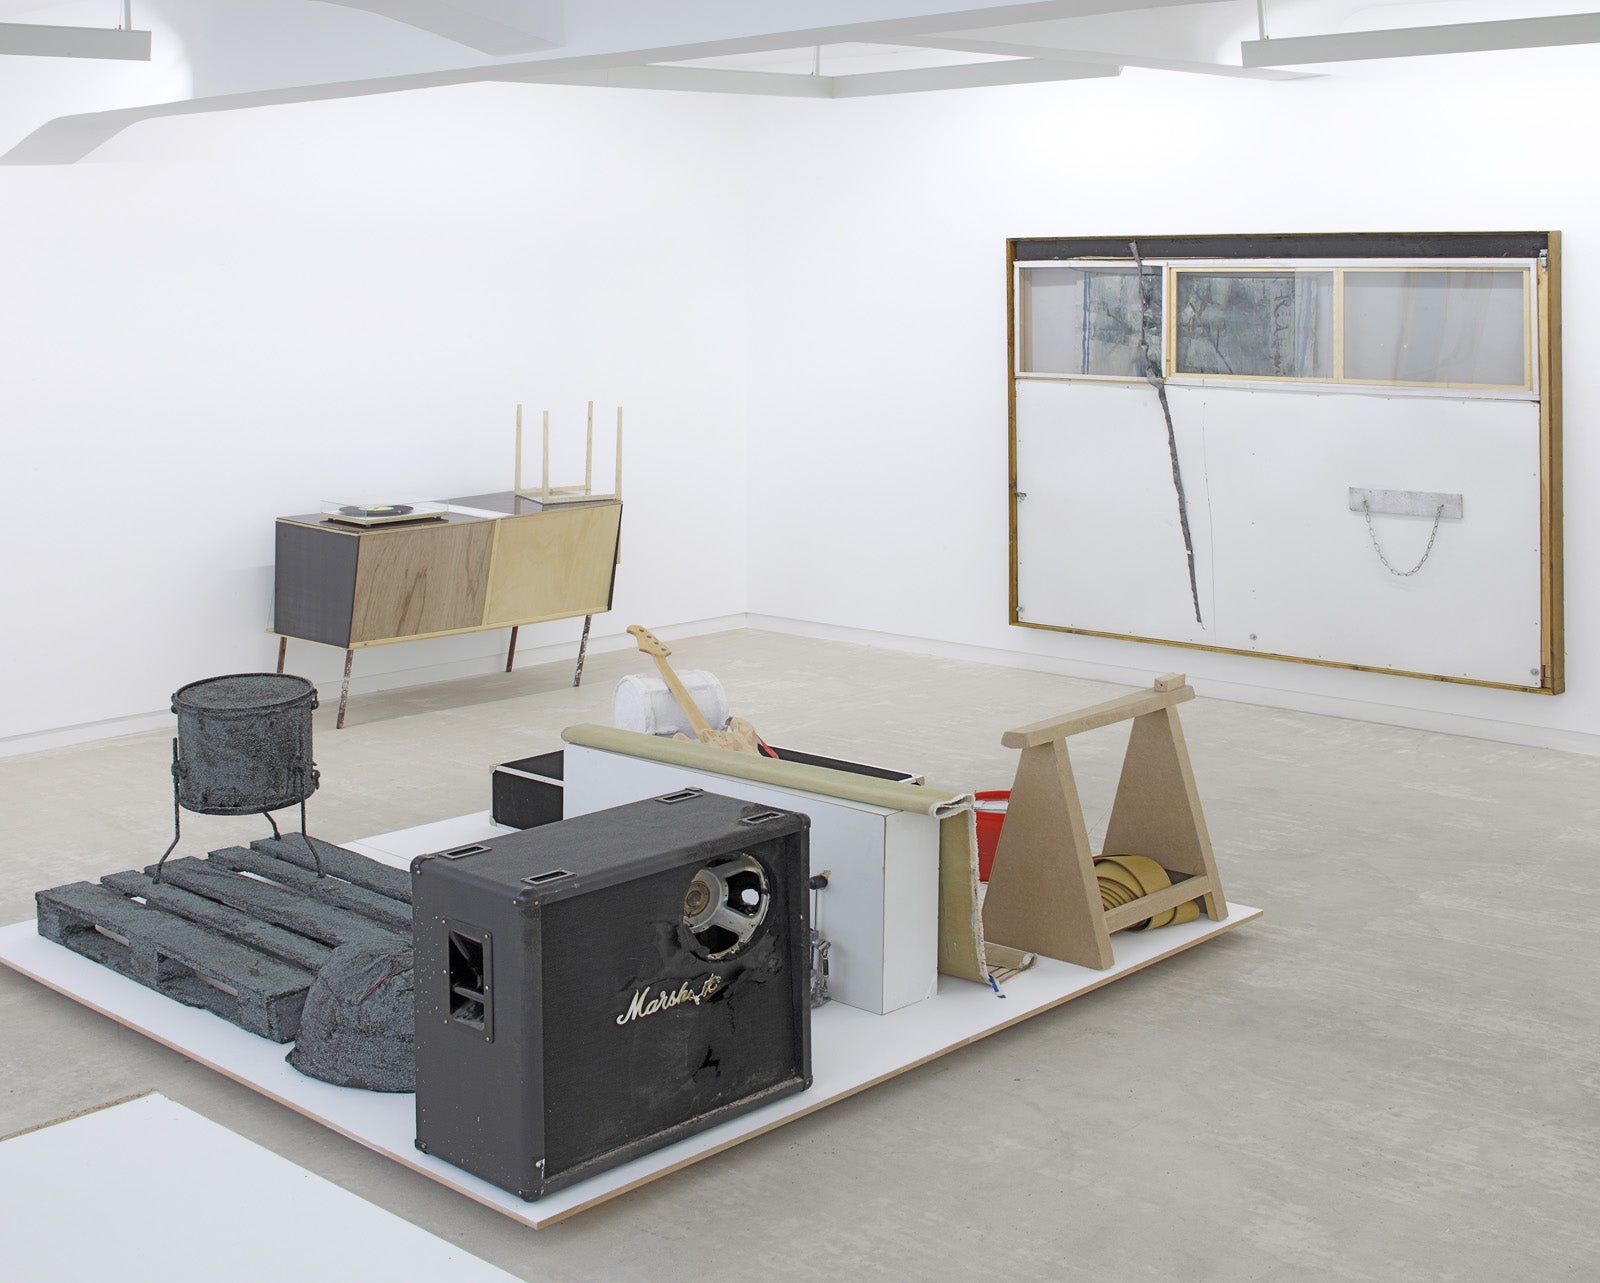 Joris Van de Moortel, Like a hurricane (you are like), Installation view, 2010, Galerie Michael Janssen Berlin